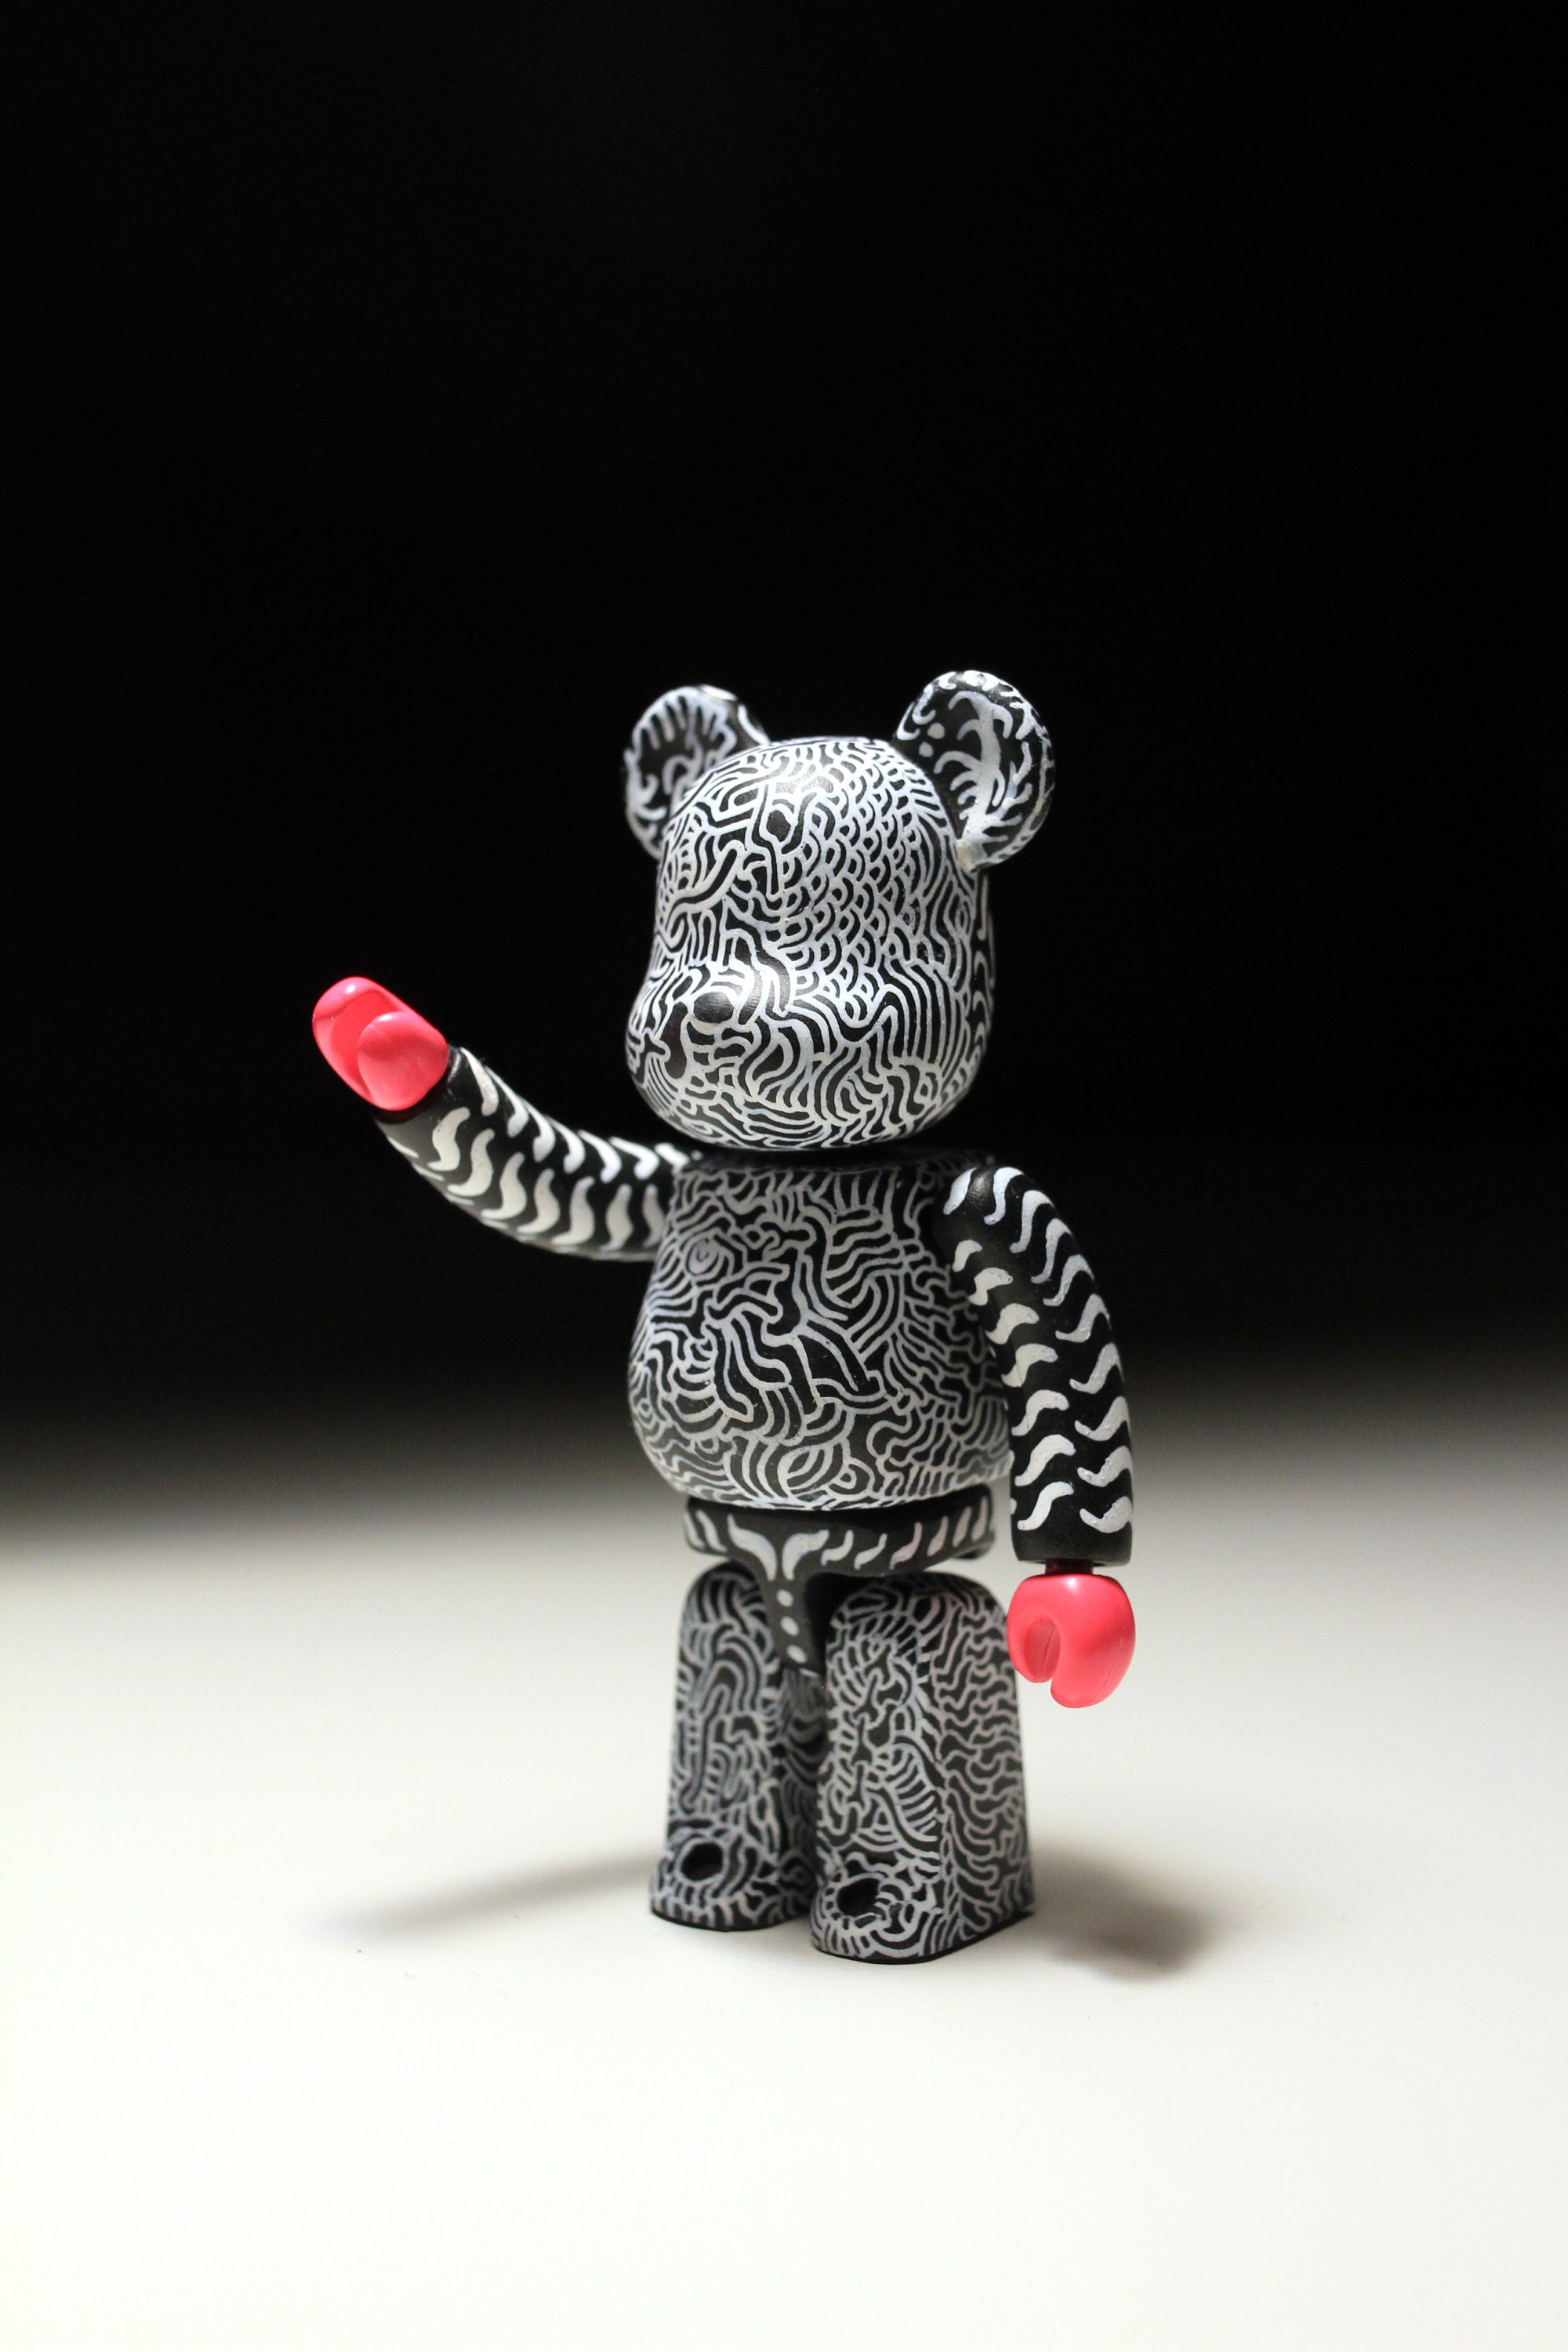 Bearbrick 400% Violence Bear Bear Brick Sculptures Figurines